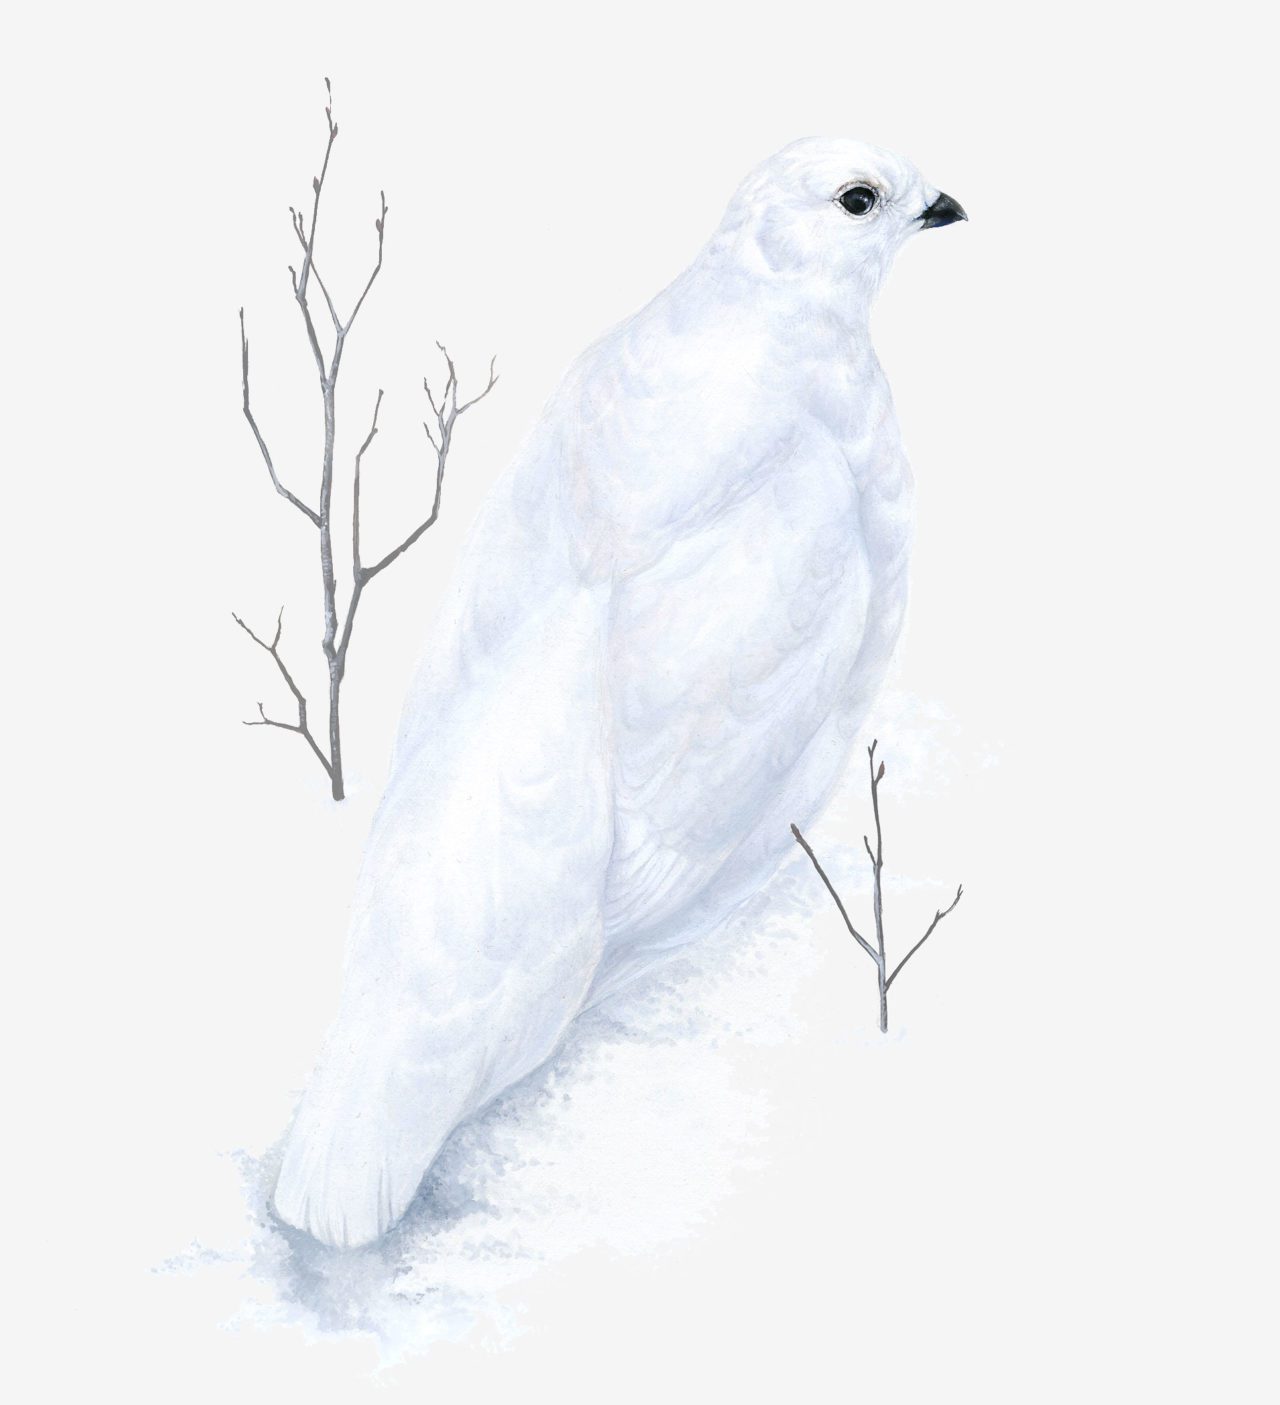 White-tailed Ptarmigan in winter plumage, illustrations by Bartels Science Illustrator Jen Lobo